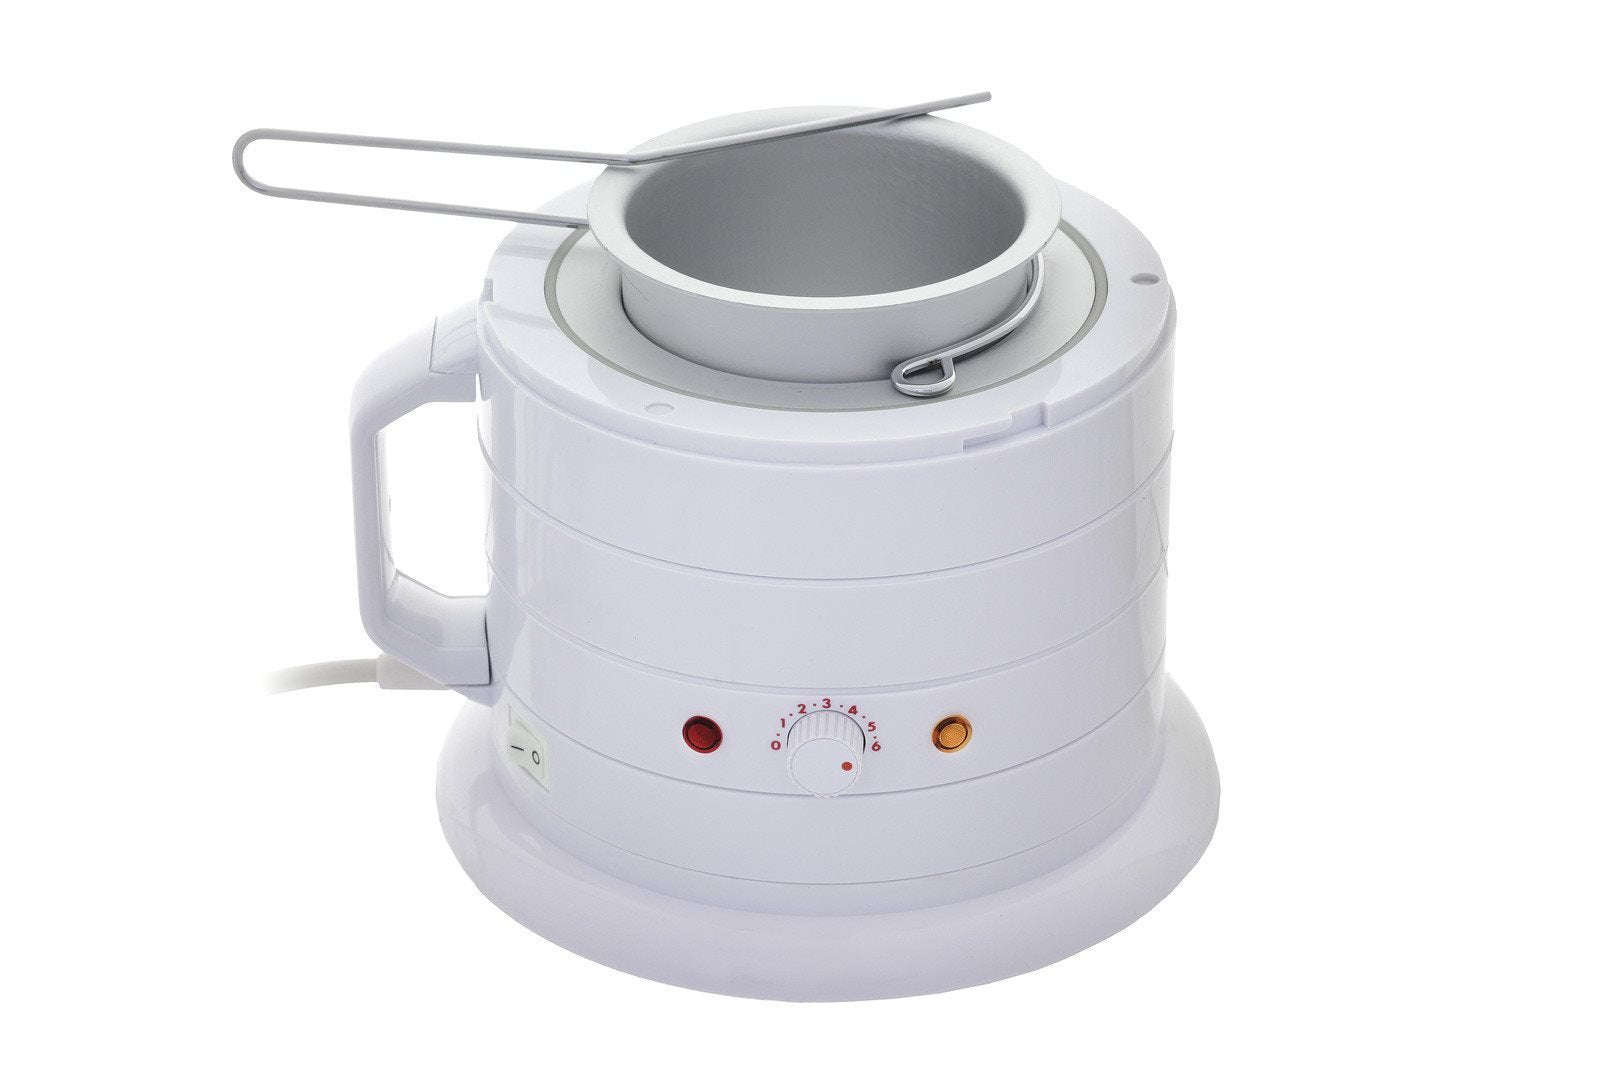 Professional Small Wax Heater | 500ml Capacity | Thermostatic Heat Control - beautyhair.co.ukWax Heaters